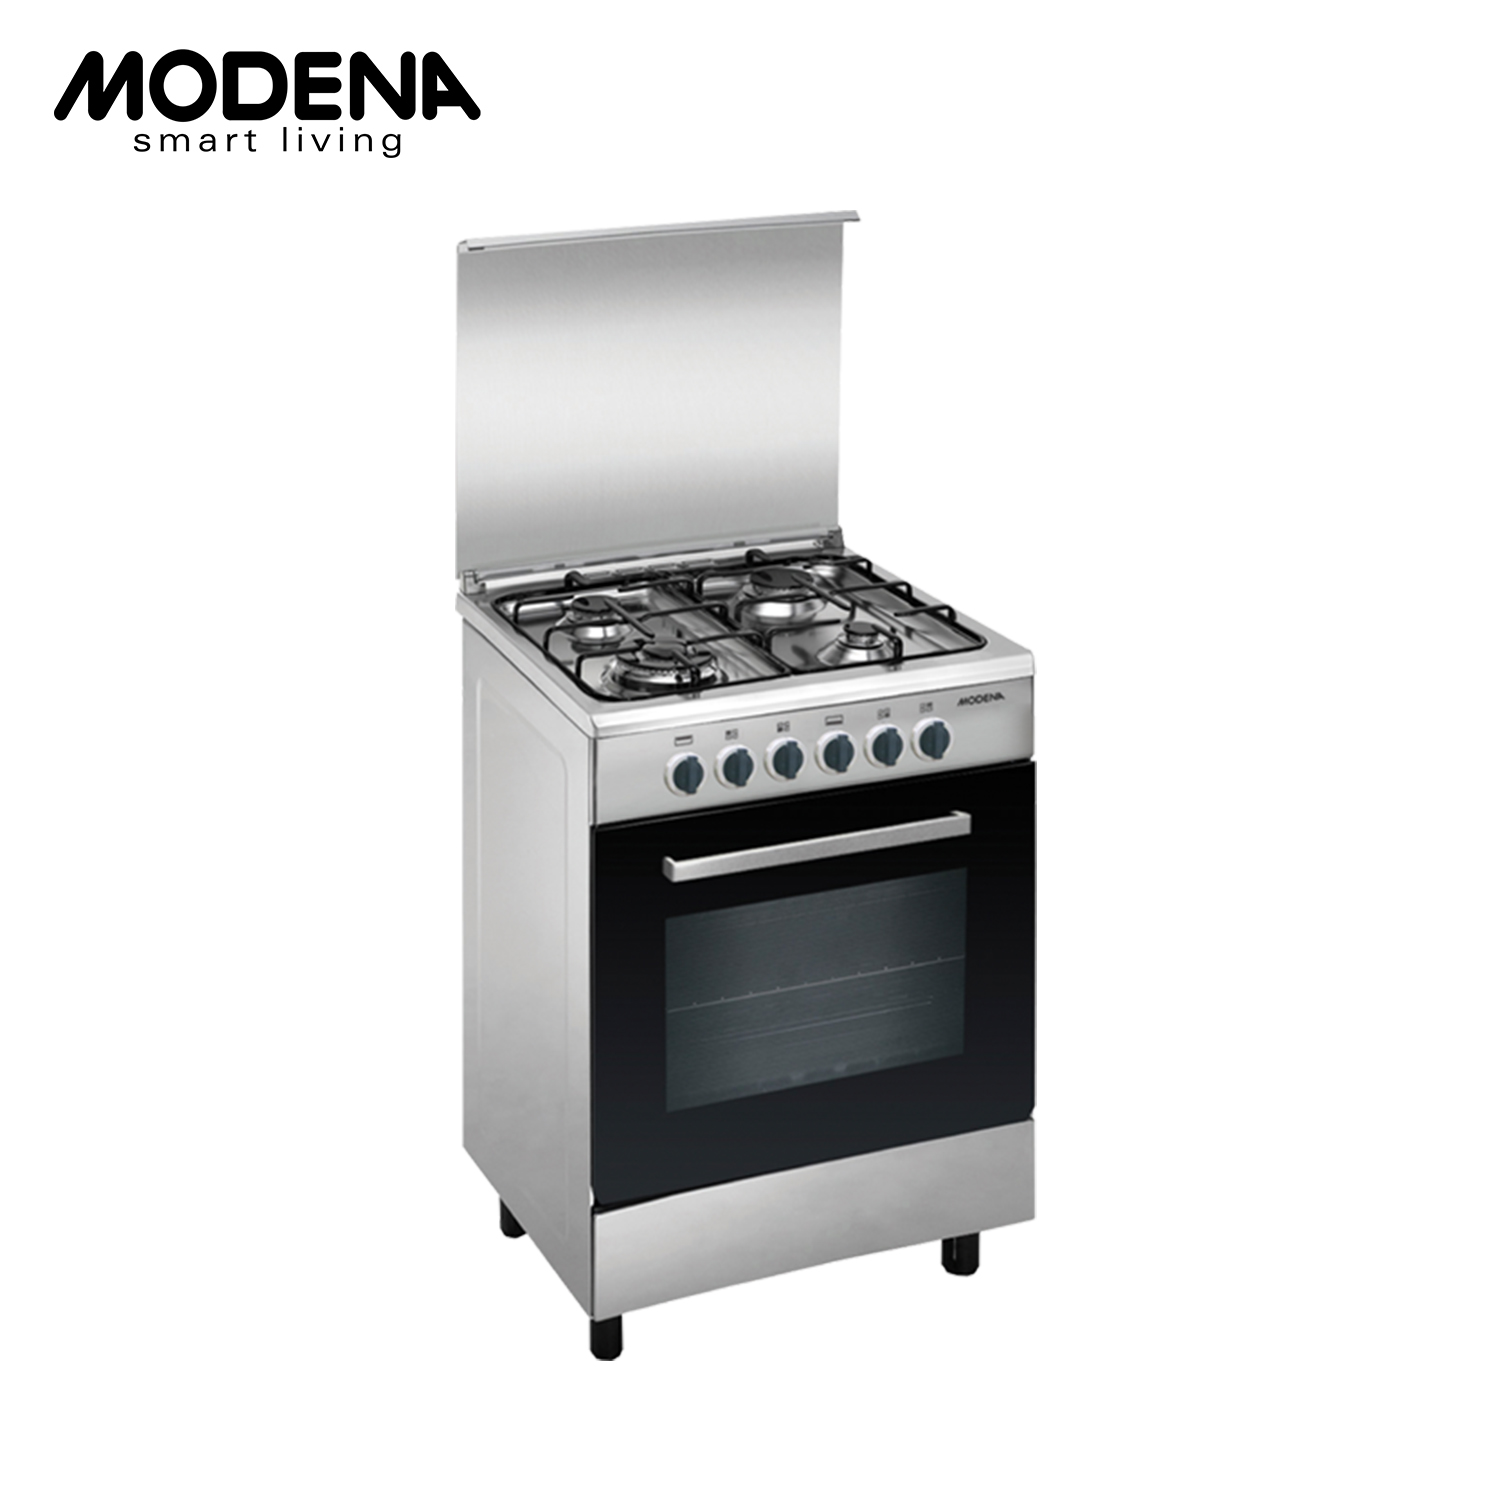 Modena FC 5642 S Freestanding Cooker - Kompor Gas